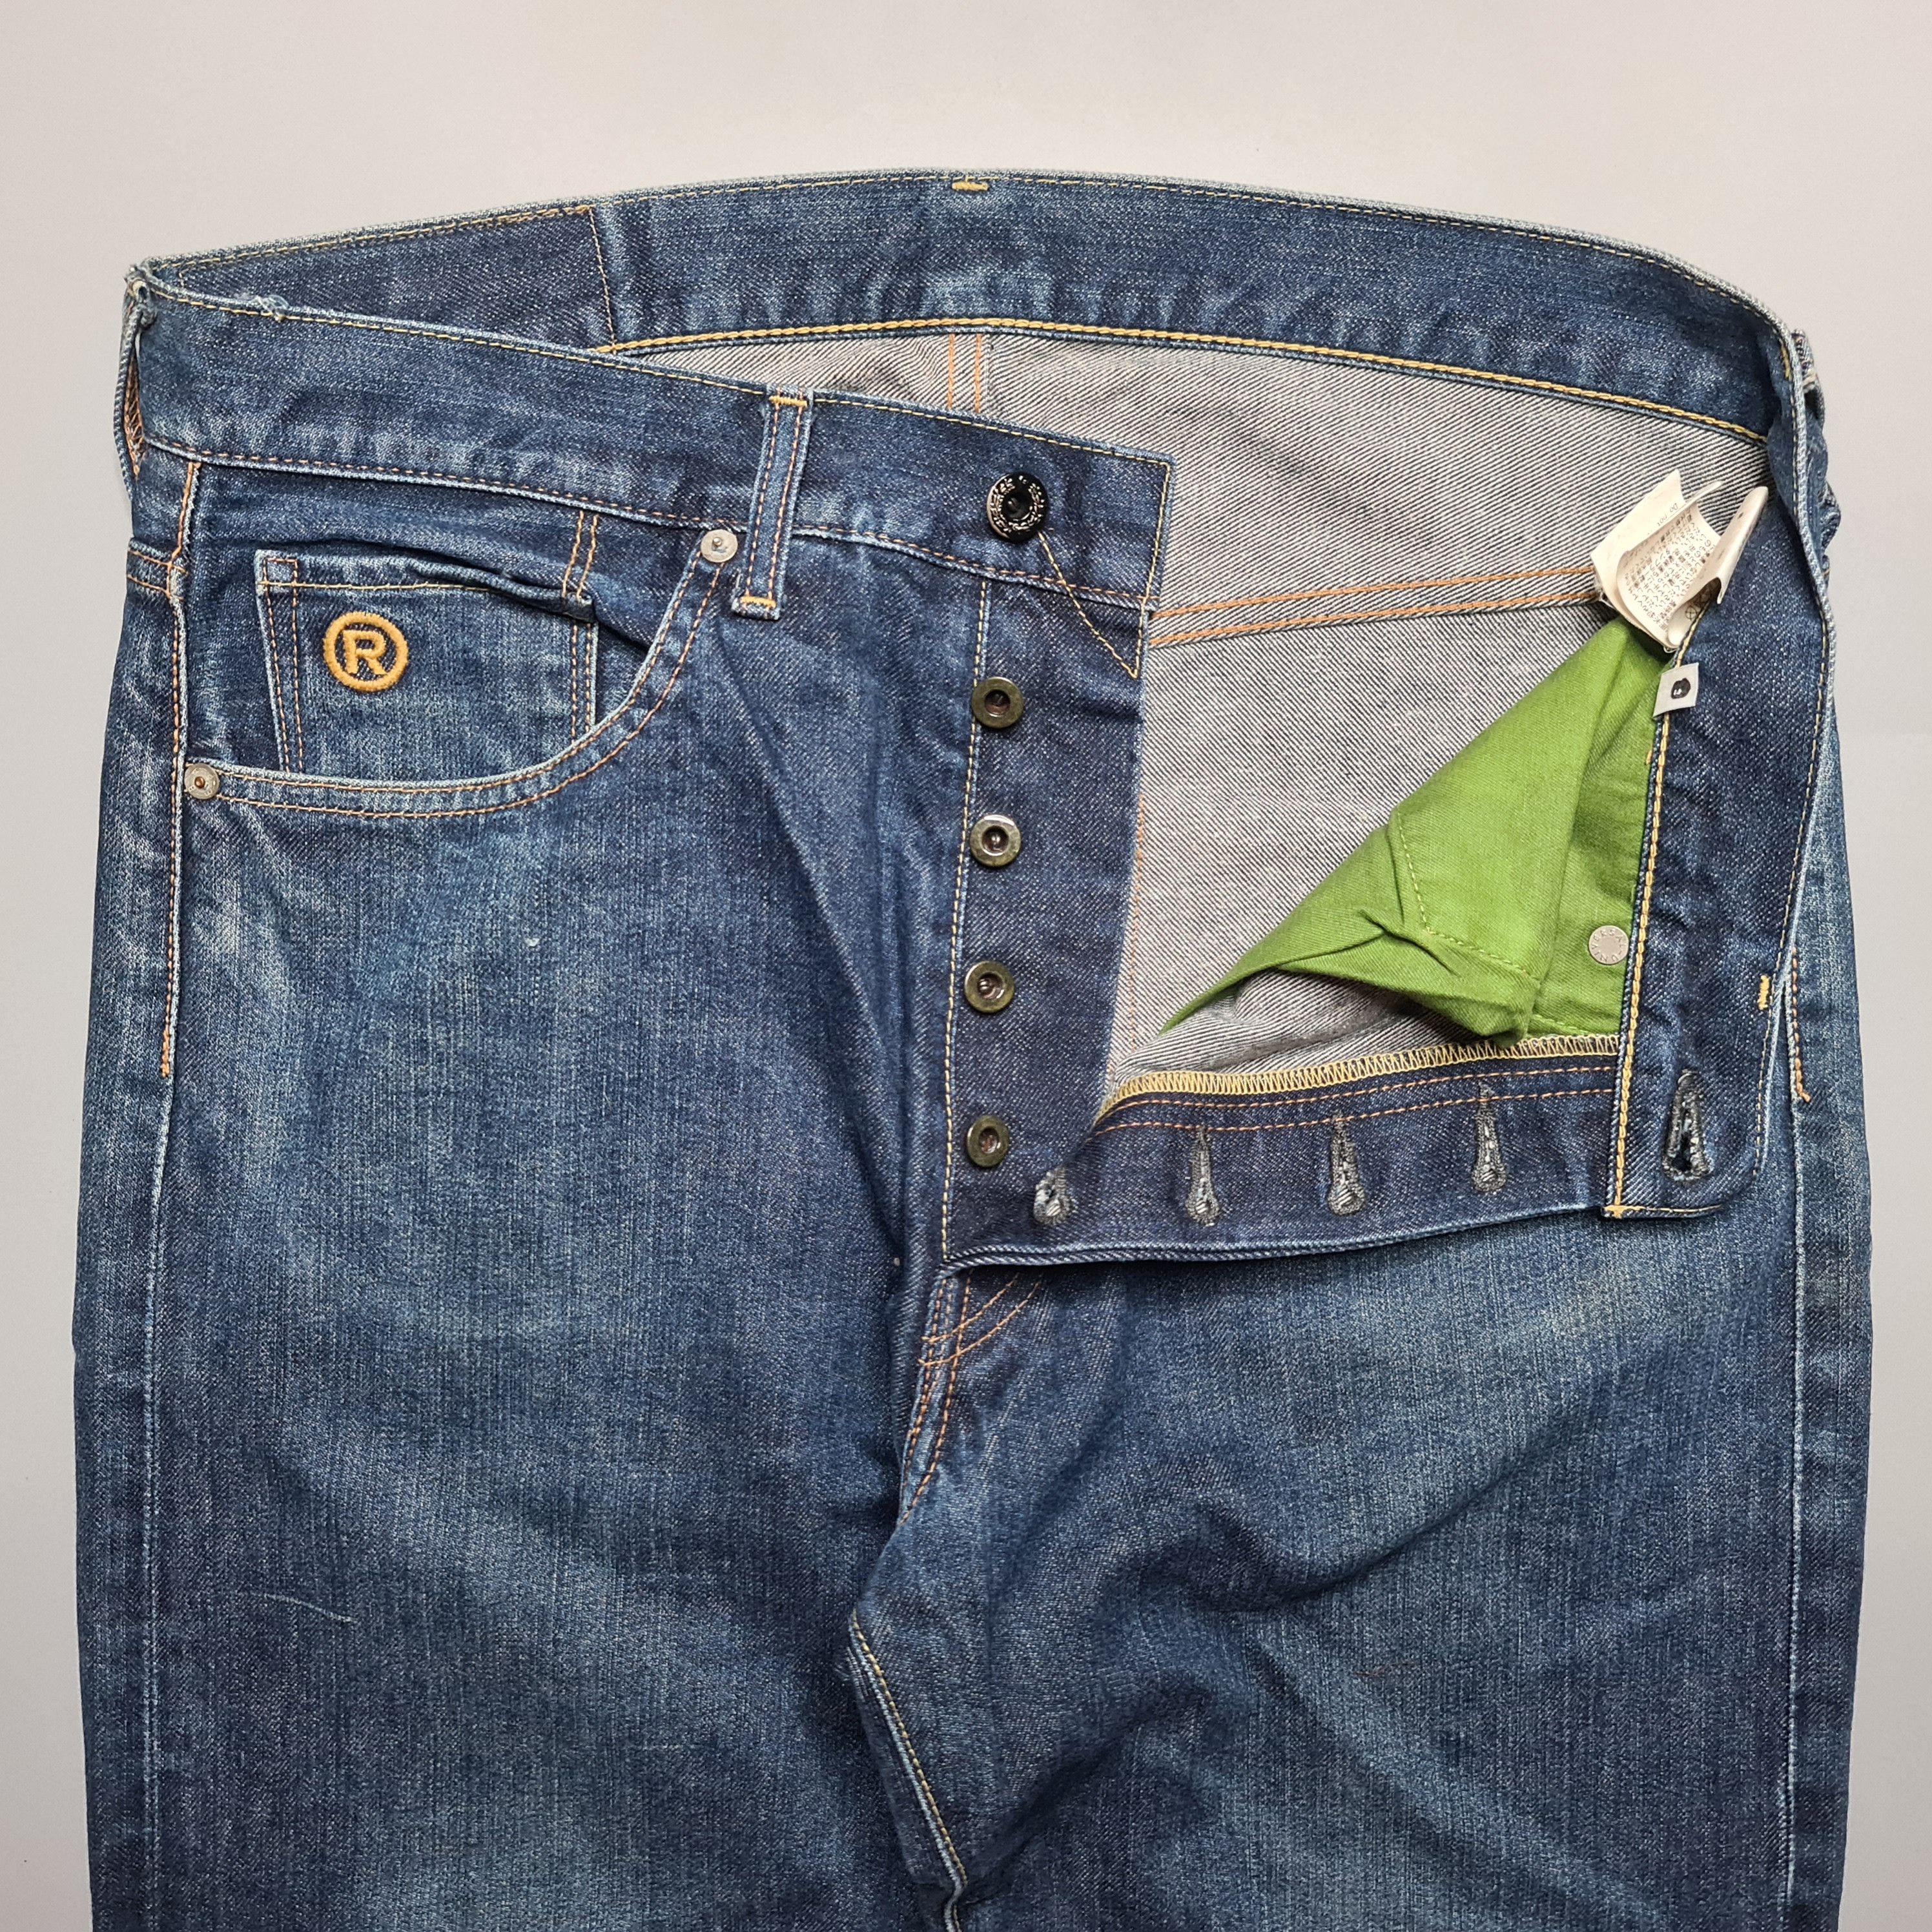 Bape - OG Bape "Sta" Embroidered Jeans - 2